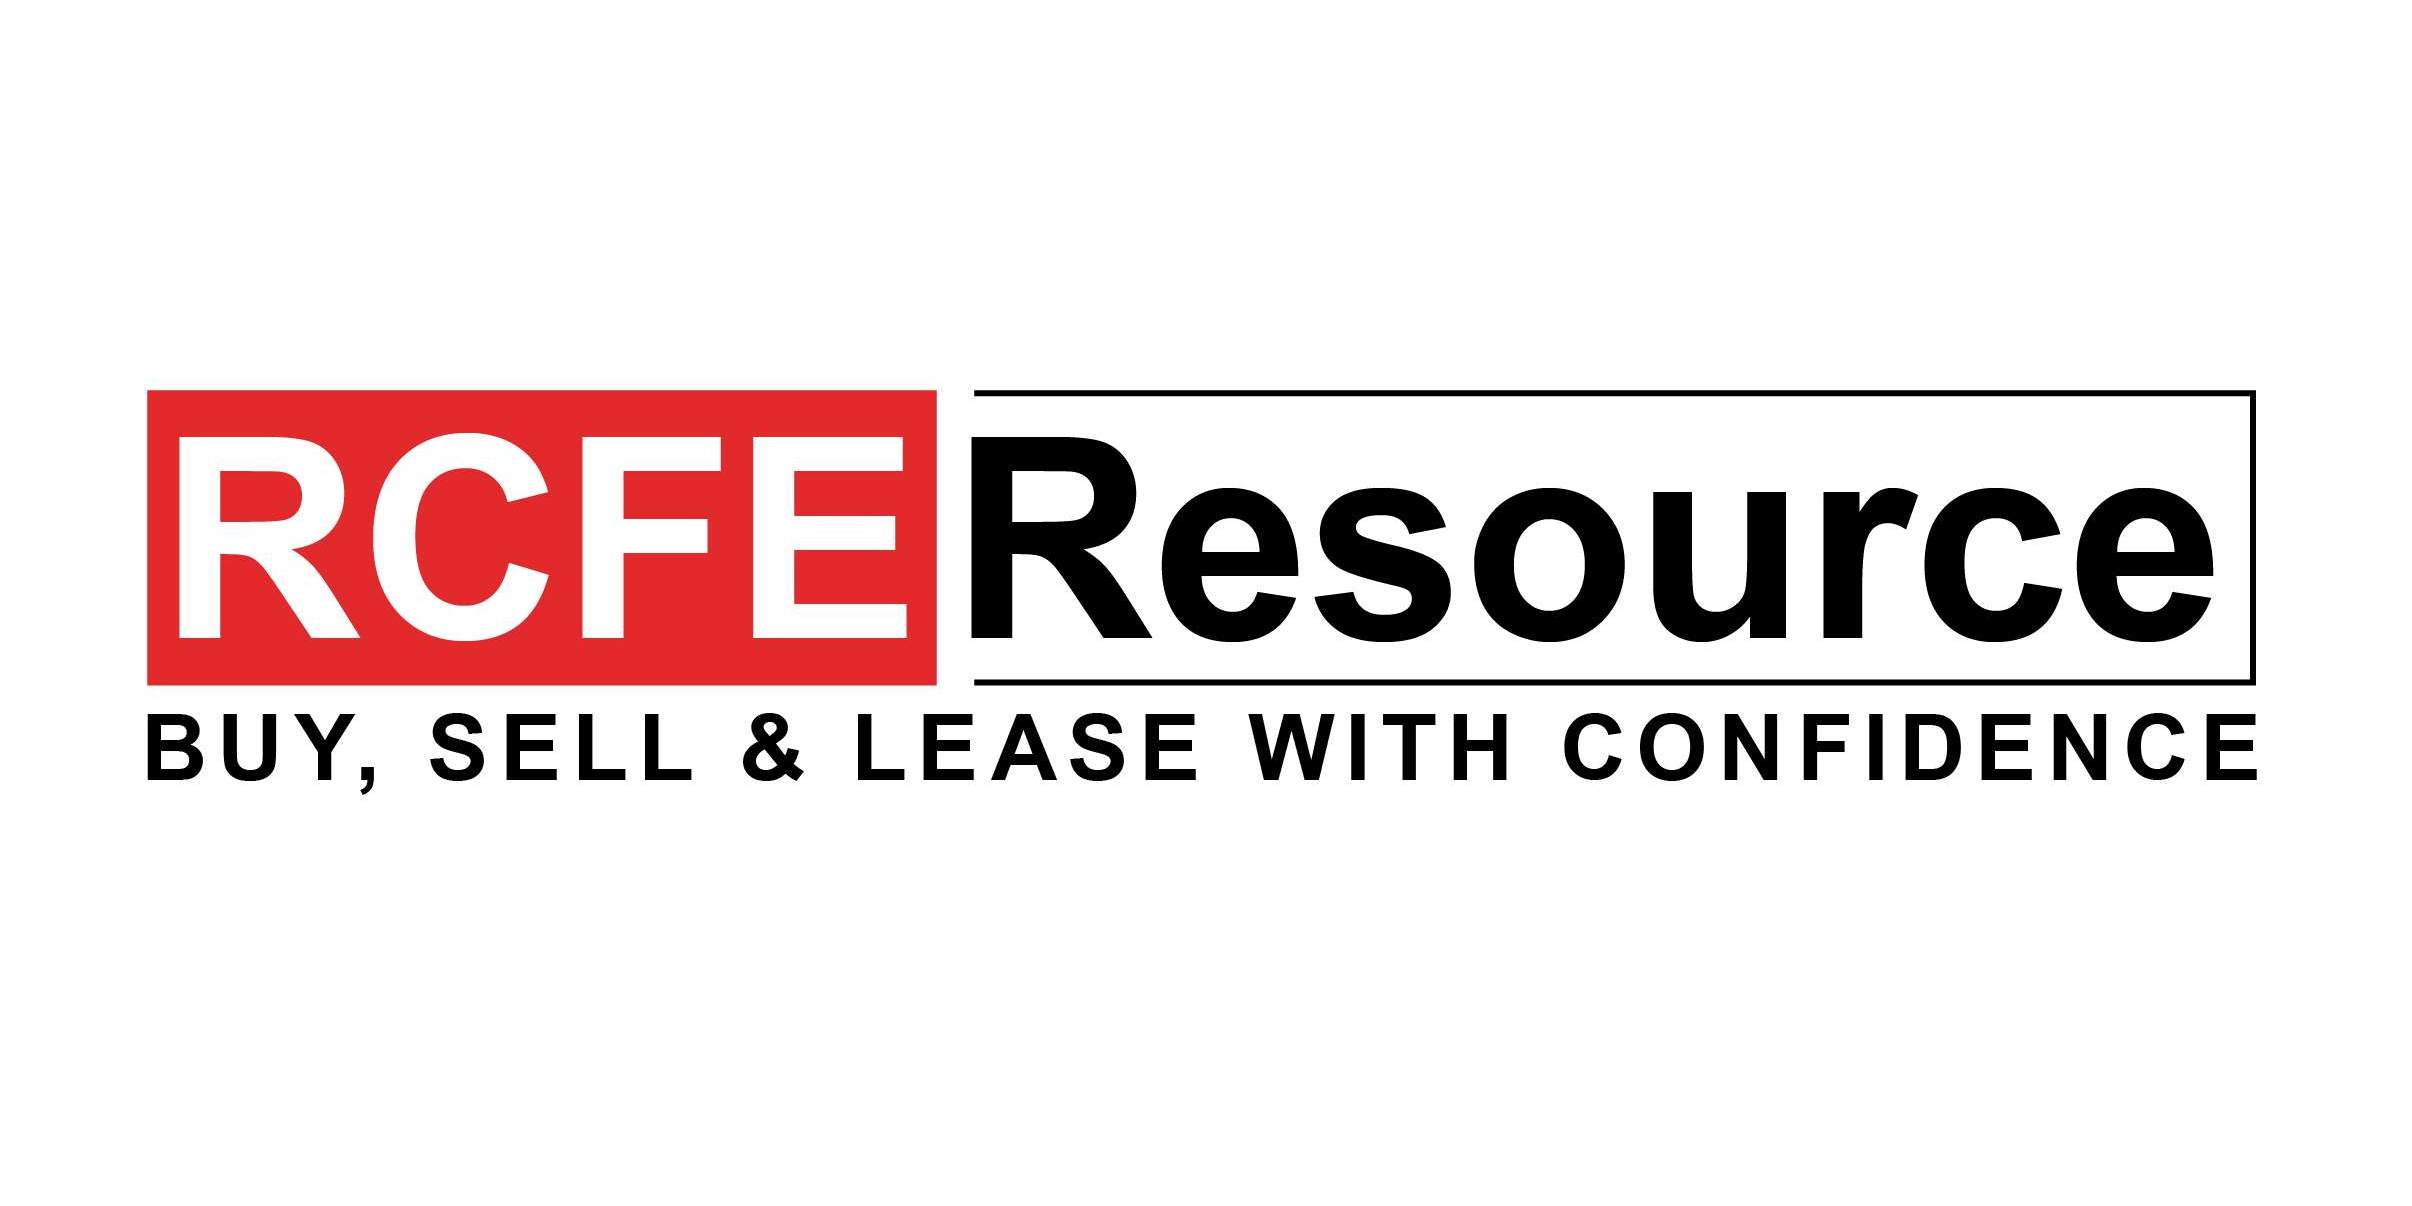 RCFE Resource